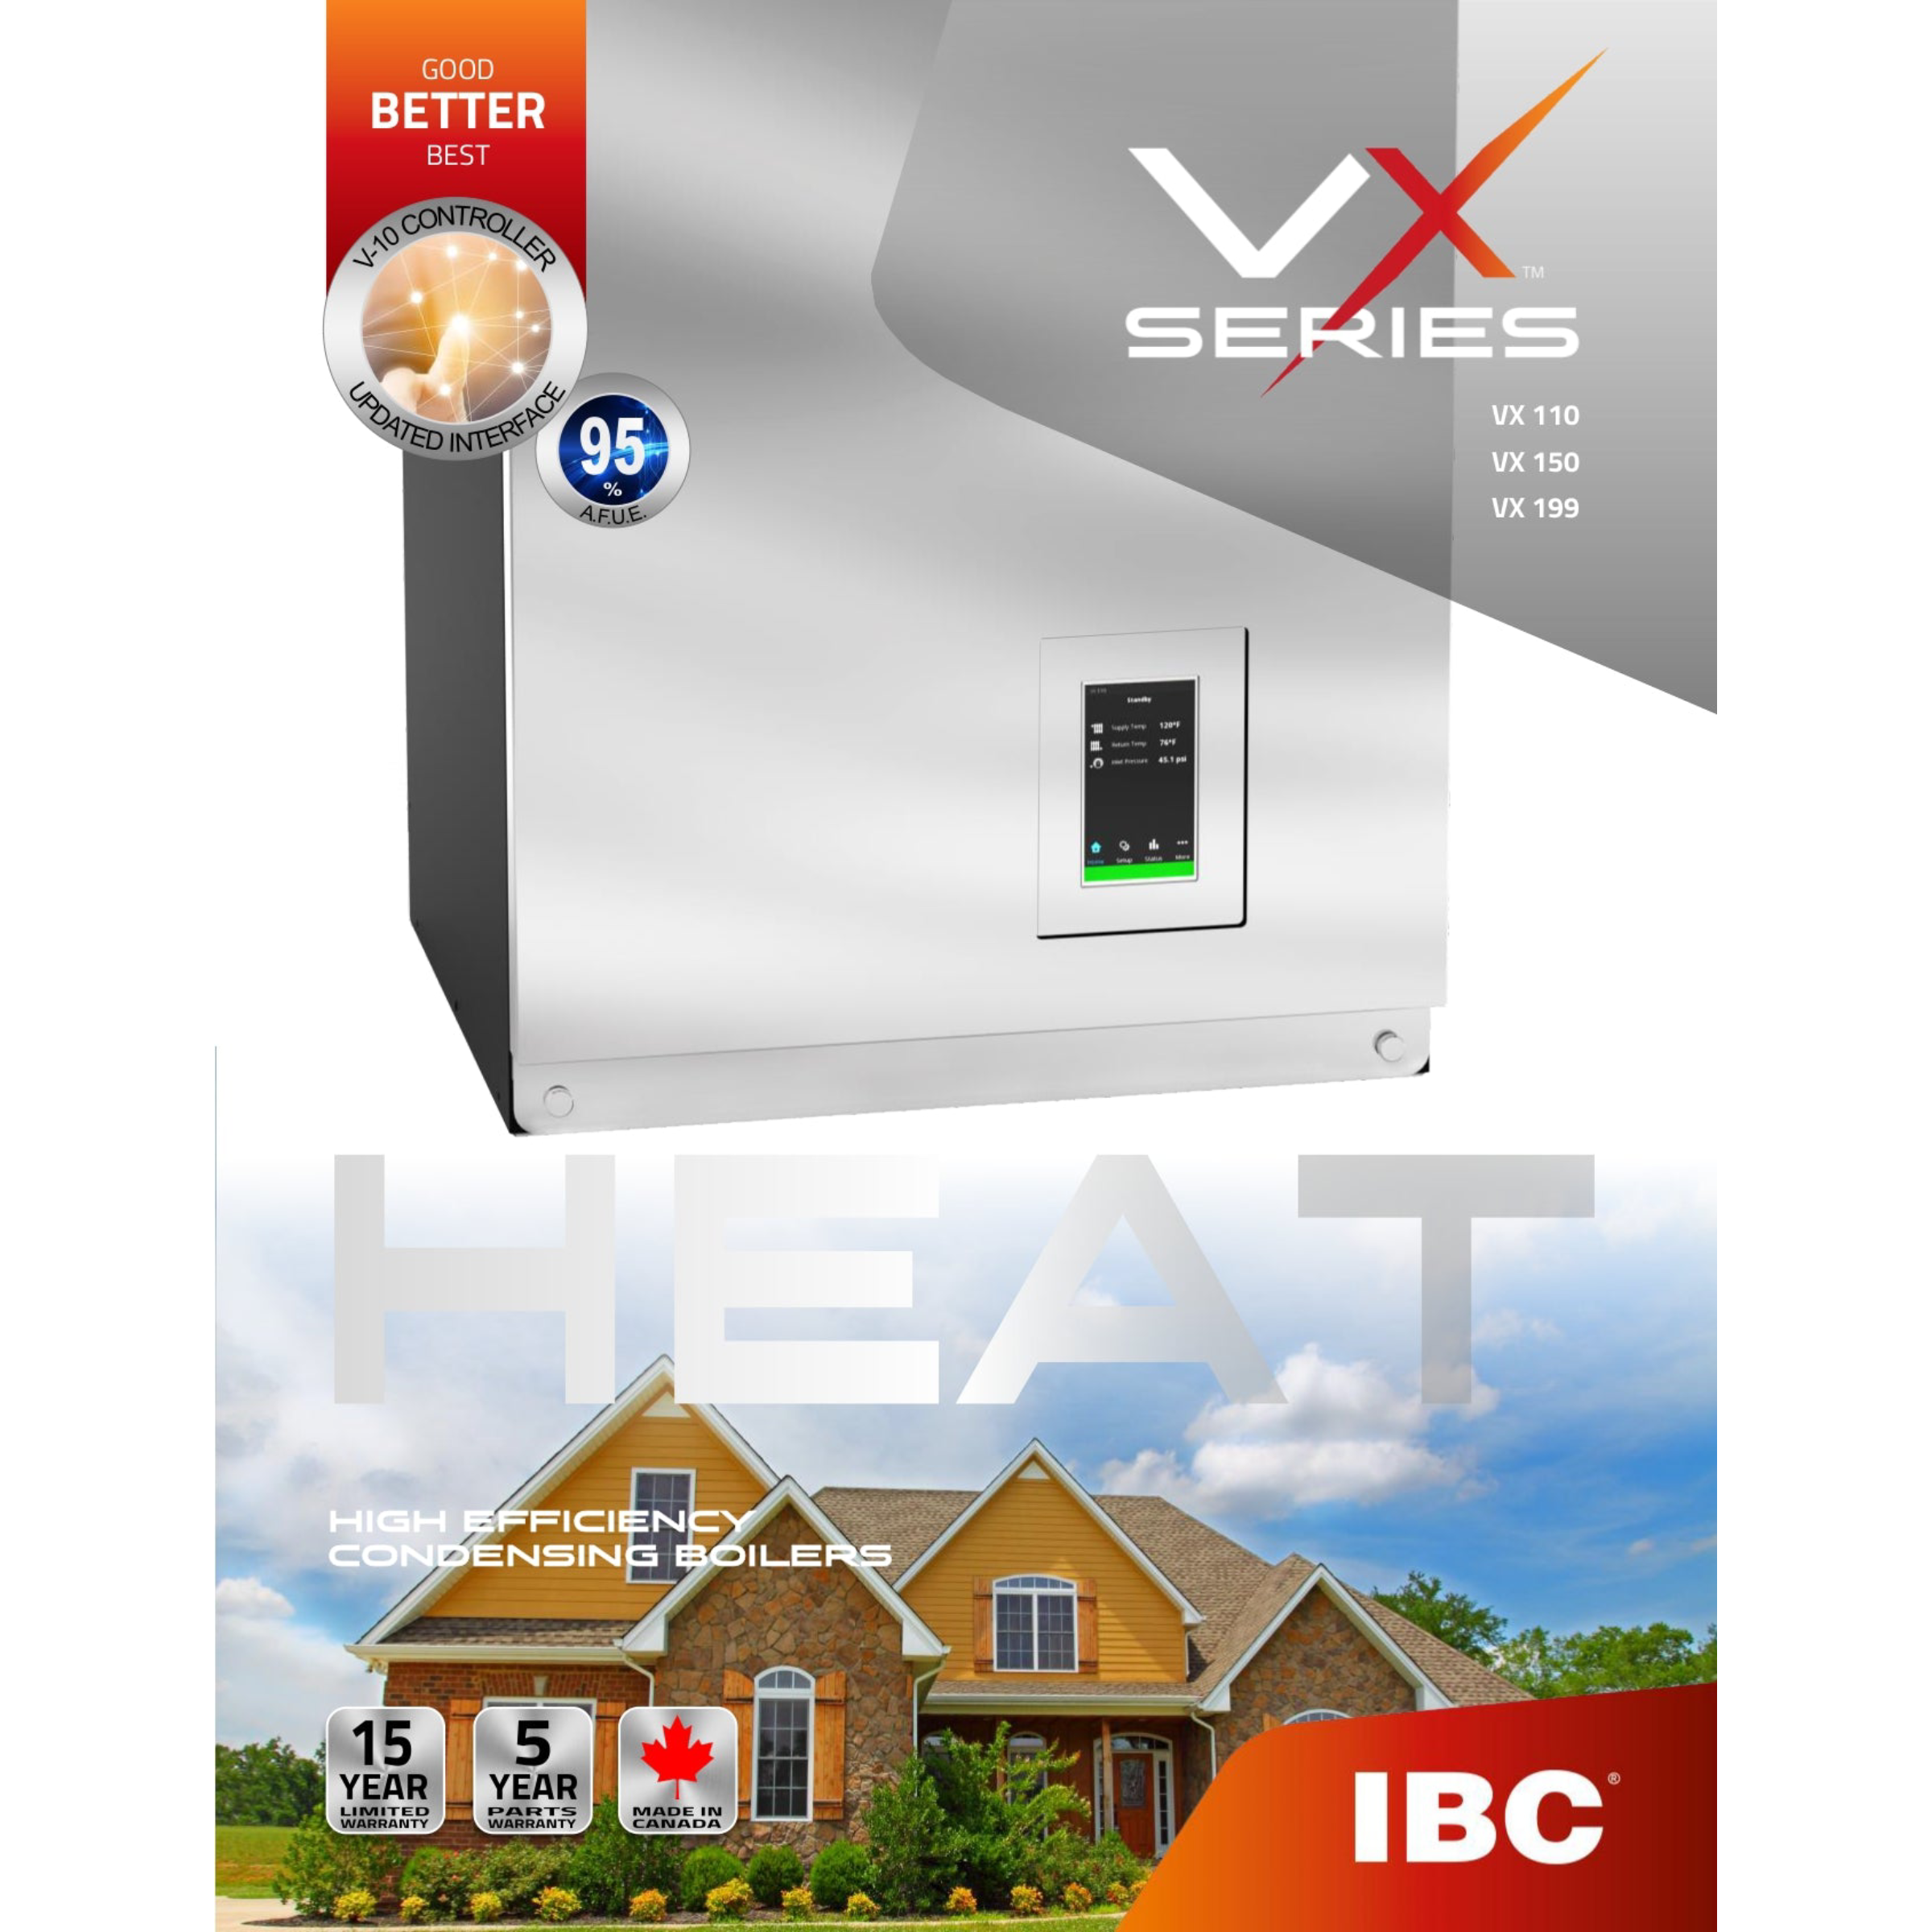 VX 110 IBC VX Series Residential High-Efficiency Modulating Condensing Boiler Natural Gas 16,900-110,000 BTU, 95% AFUE, Energy Star Qualified